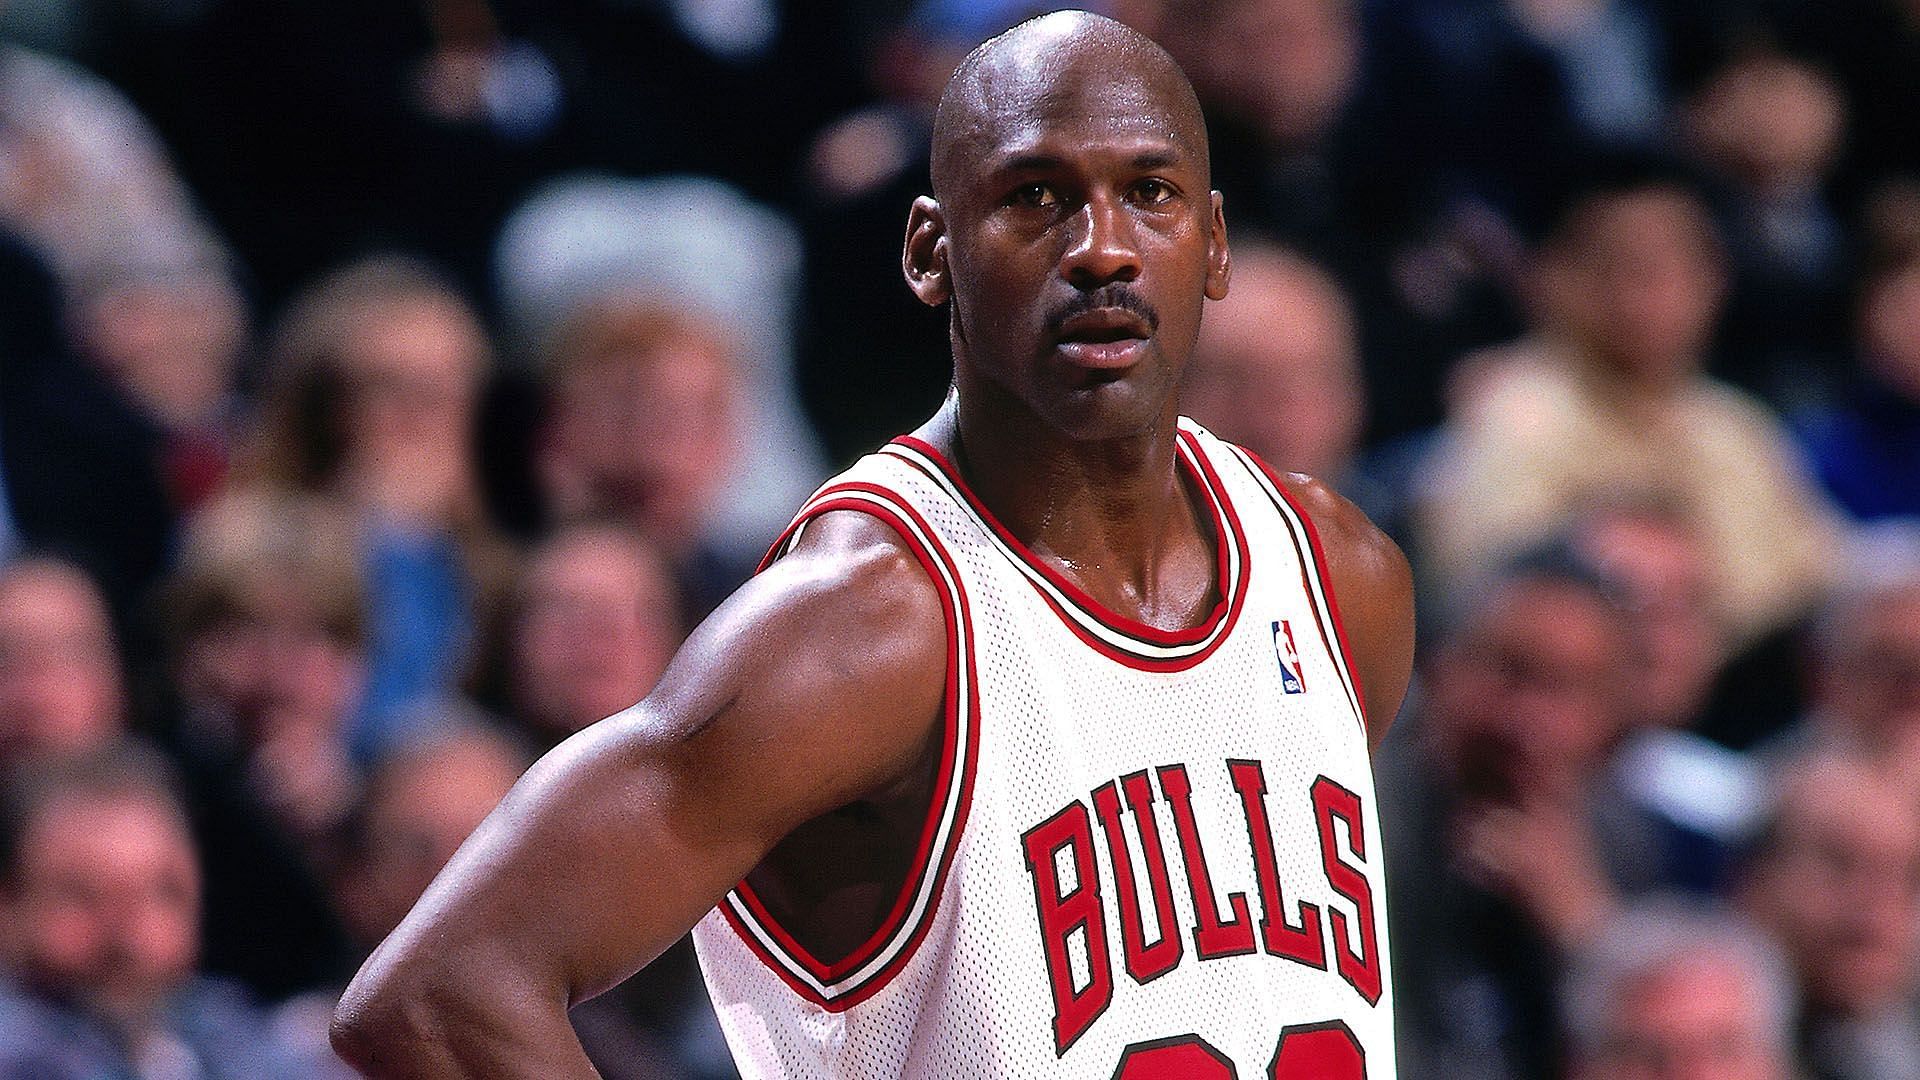 NBA - Michael Jordan playing for the Chicago Bulls